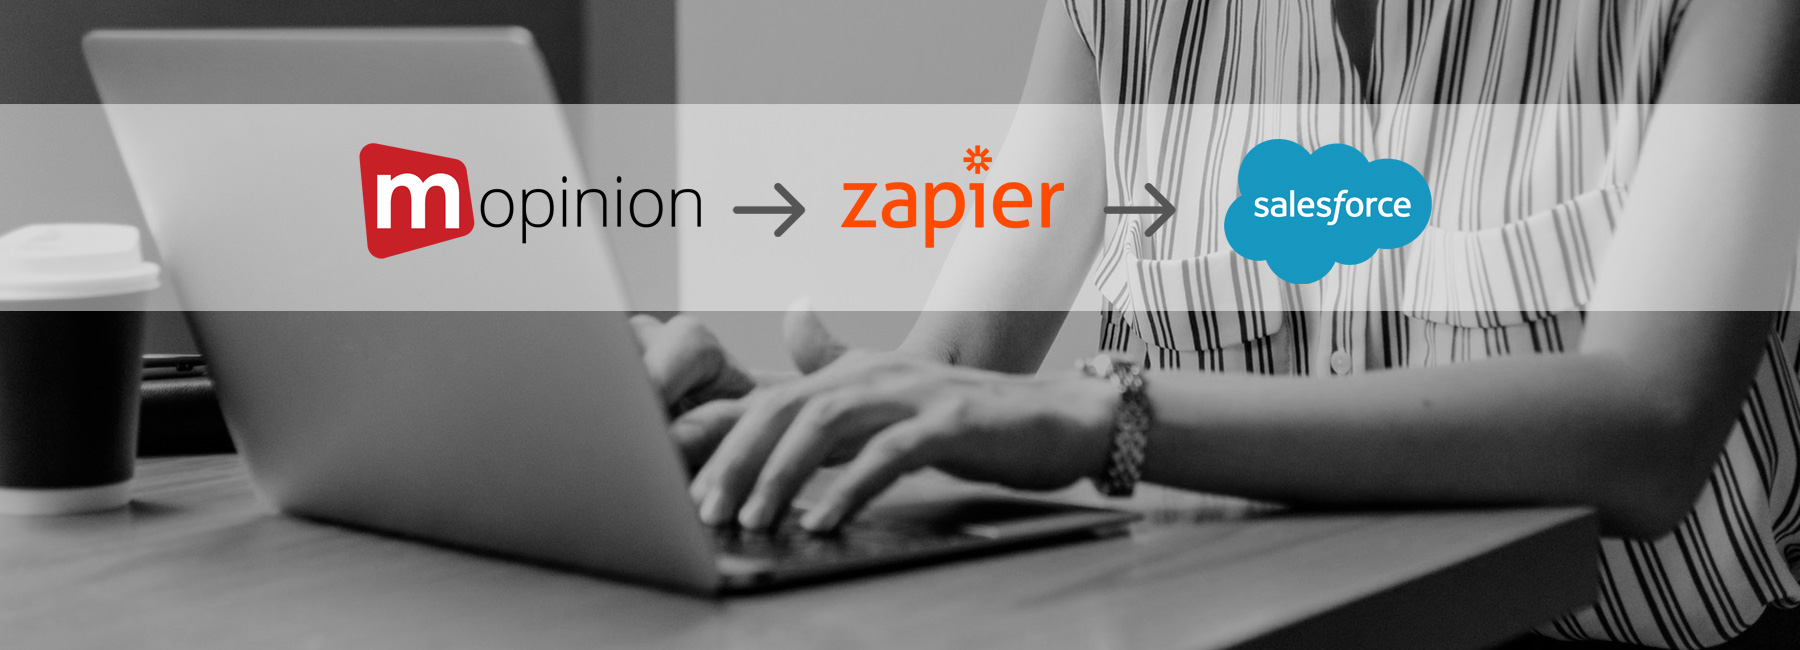 Integrating Mopinion with Salesforce (via Zapier)